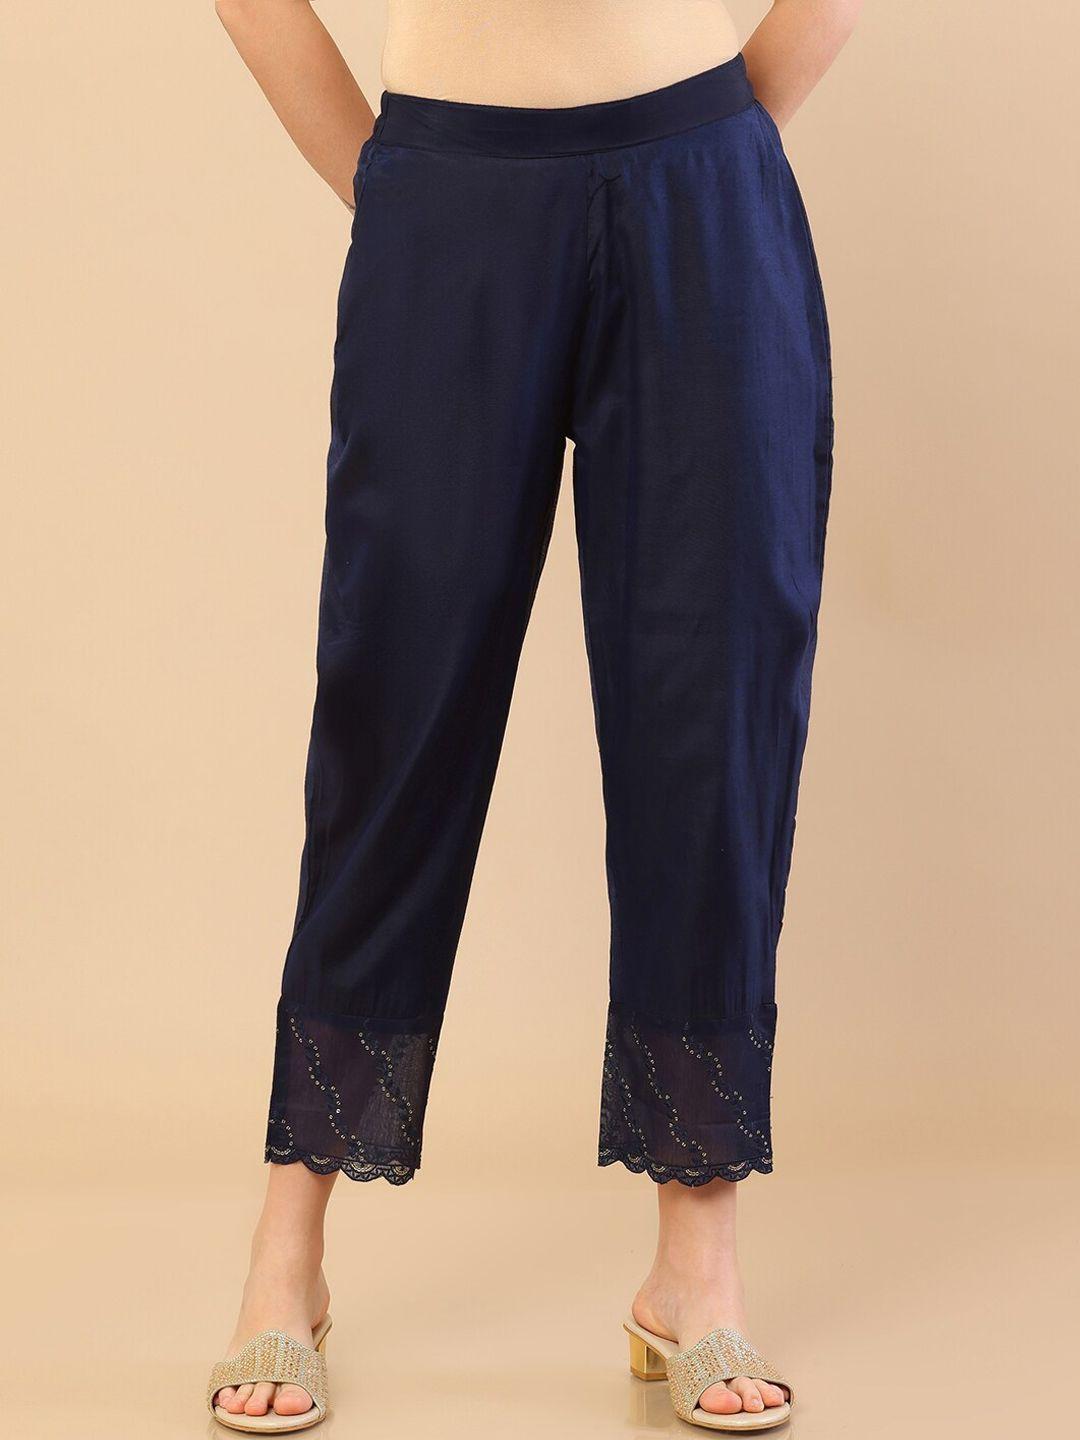 soch women navy blue high-rise jodhpuris trousers